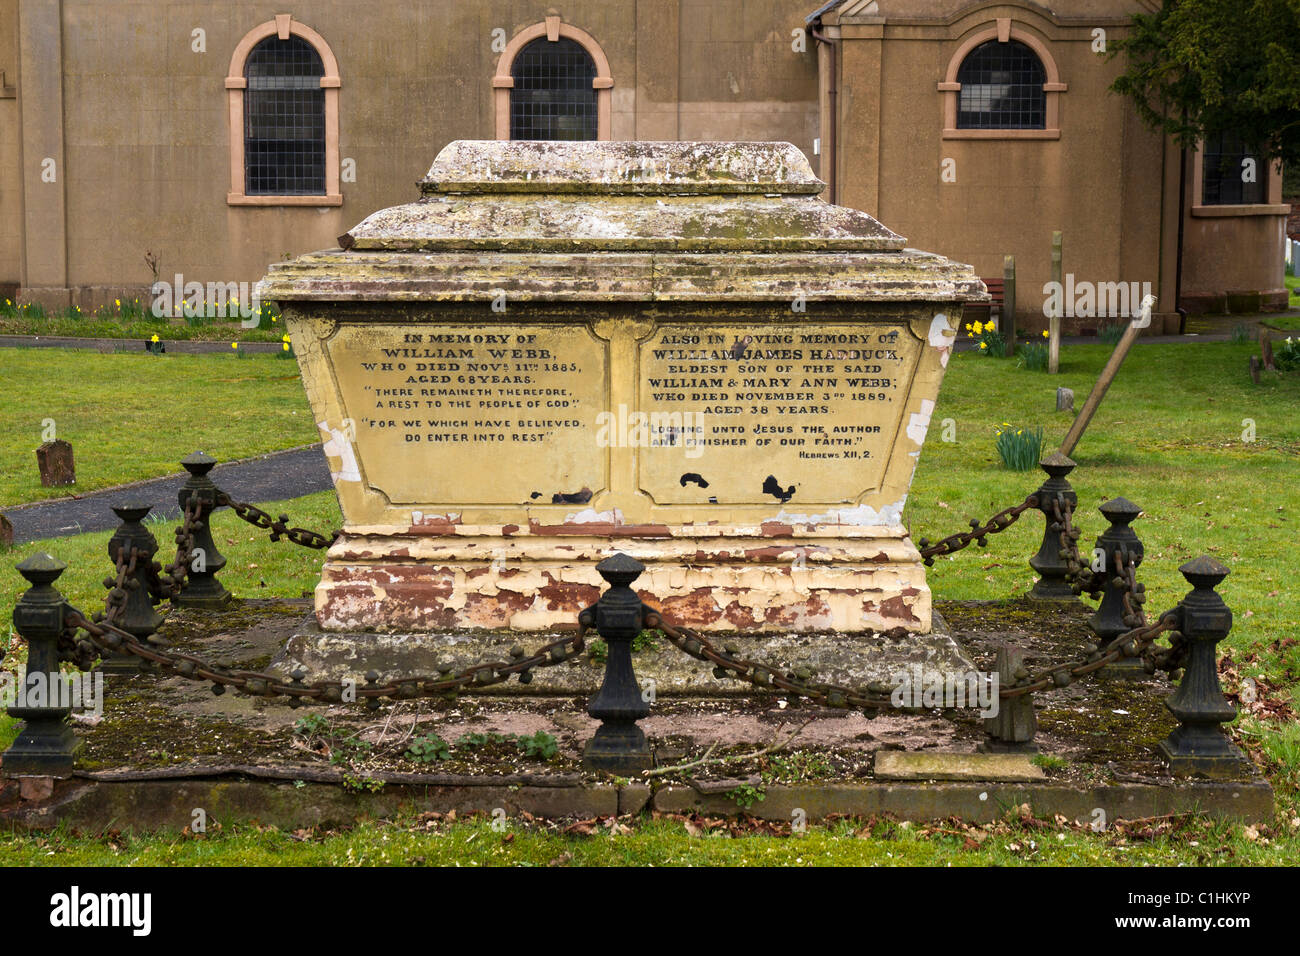 Elaborate tomb in a church yard Stock Photo